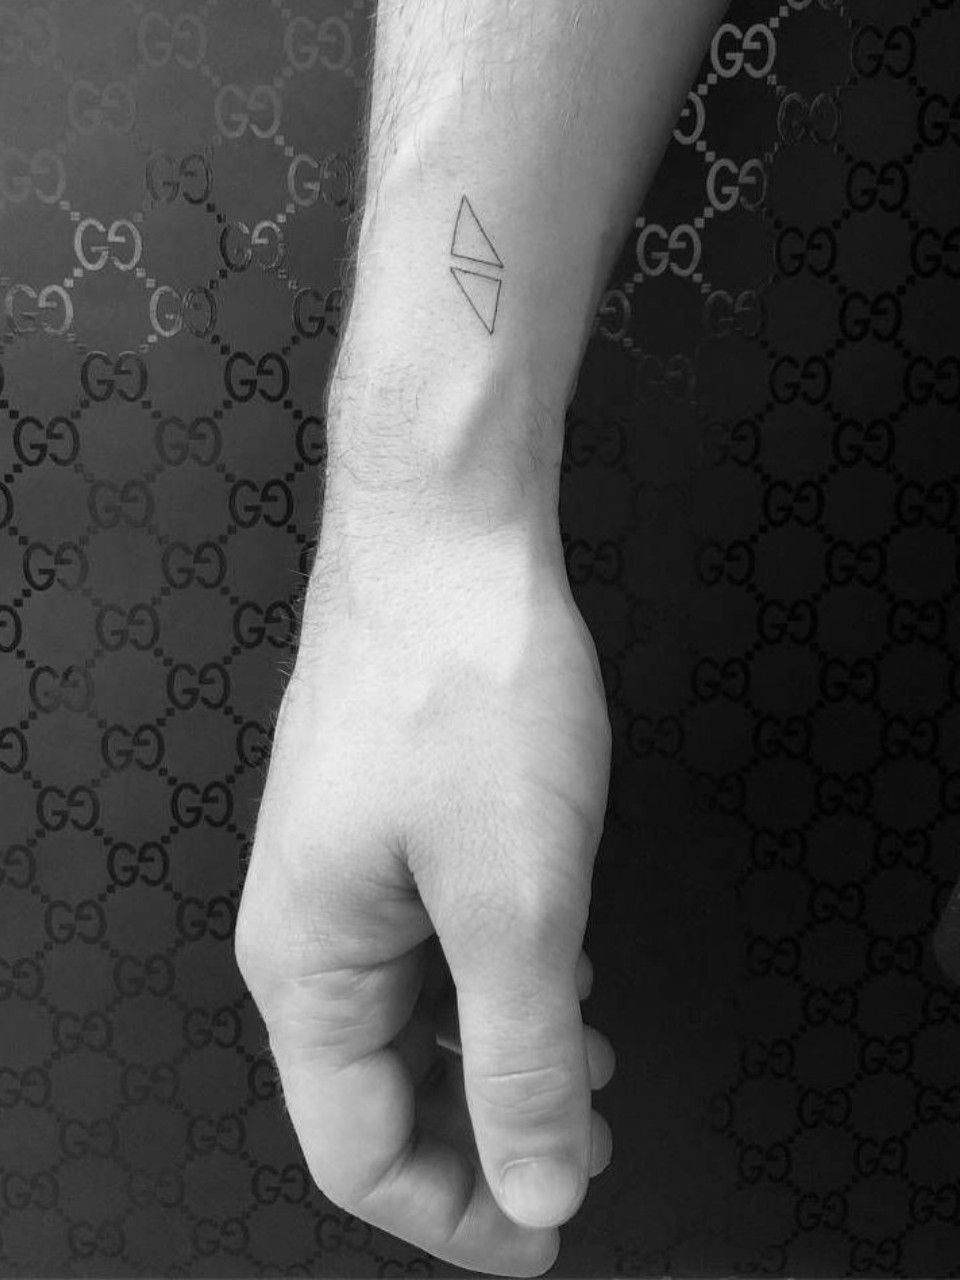 avicii logo tattoo